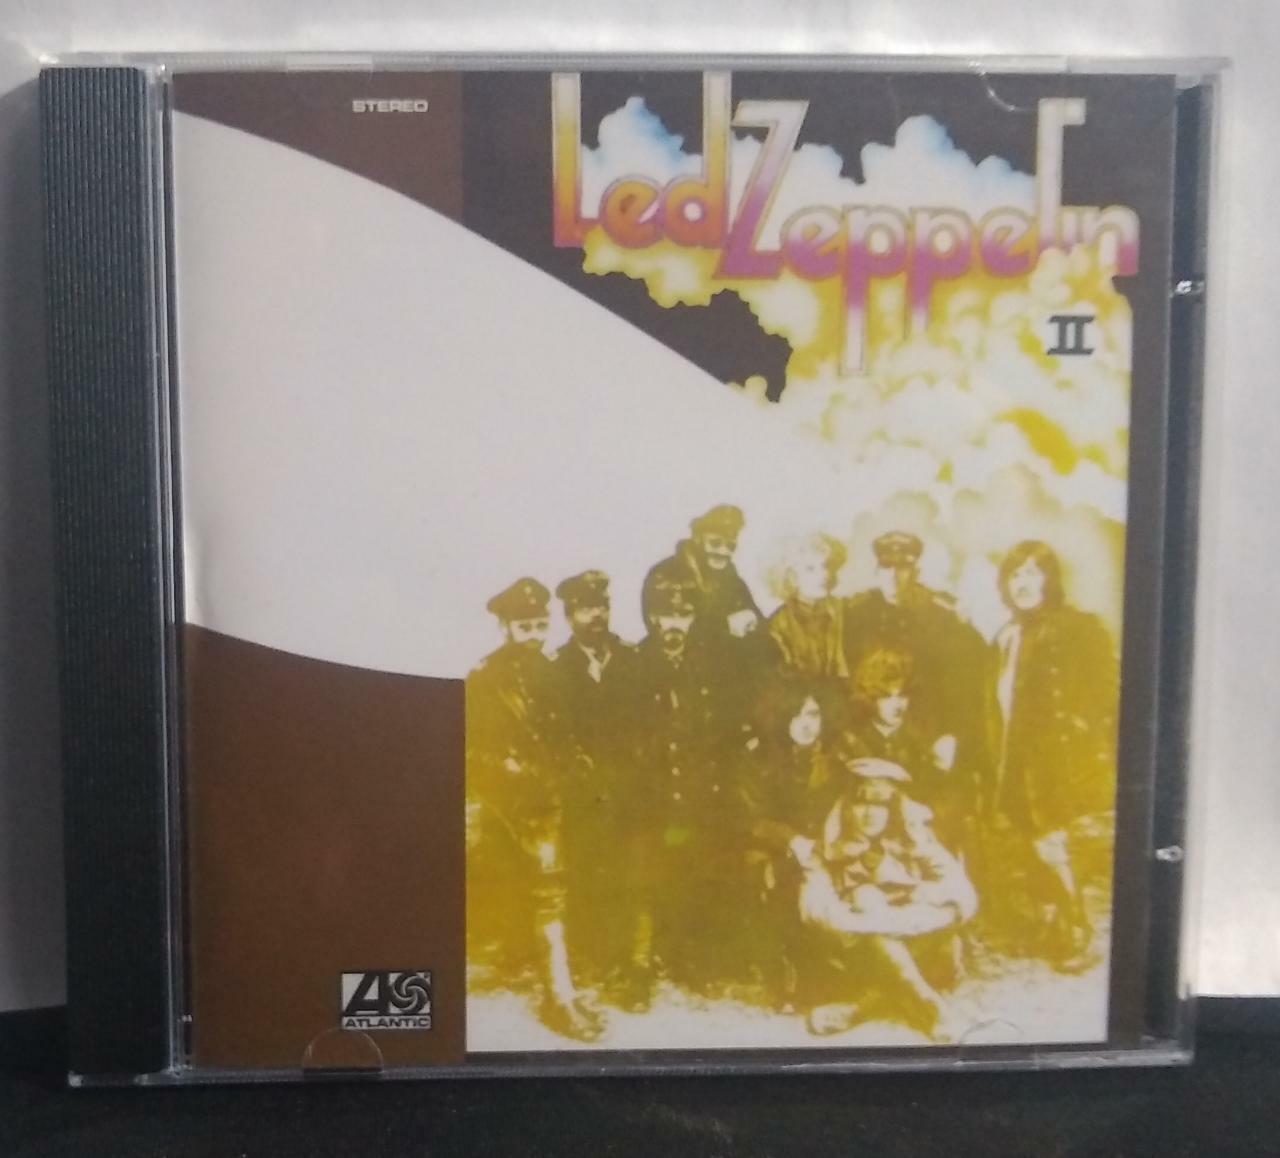 CD - Led Zeppelin - II